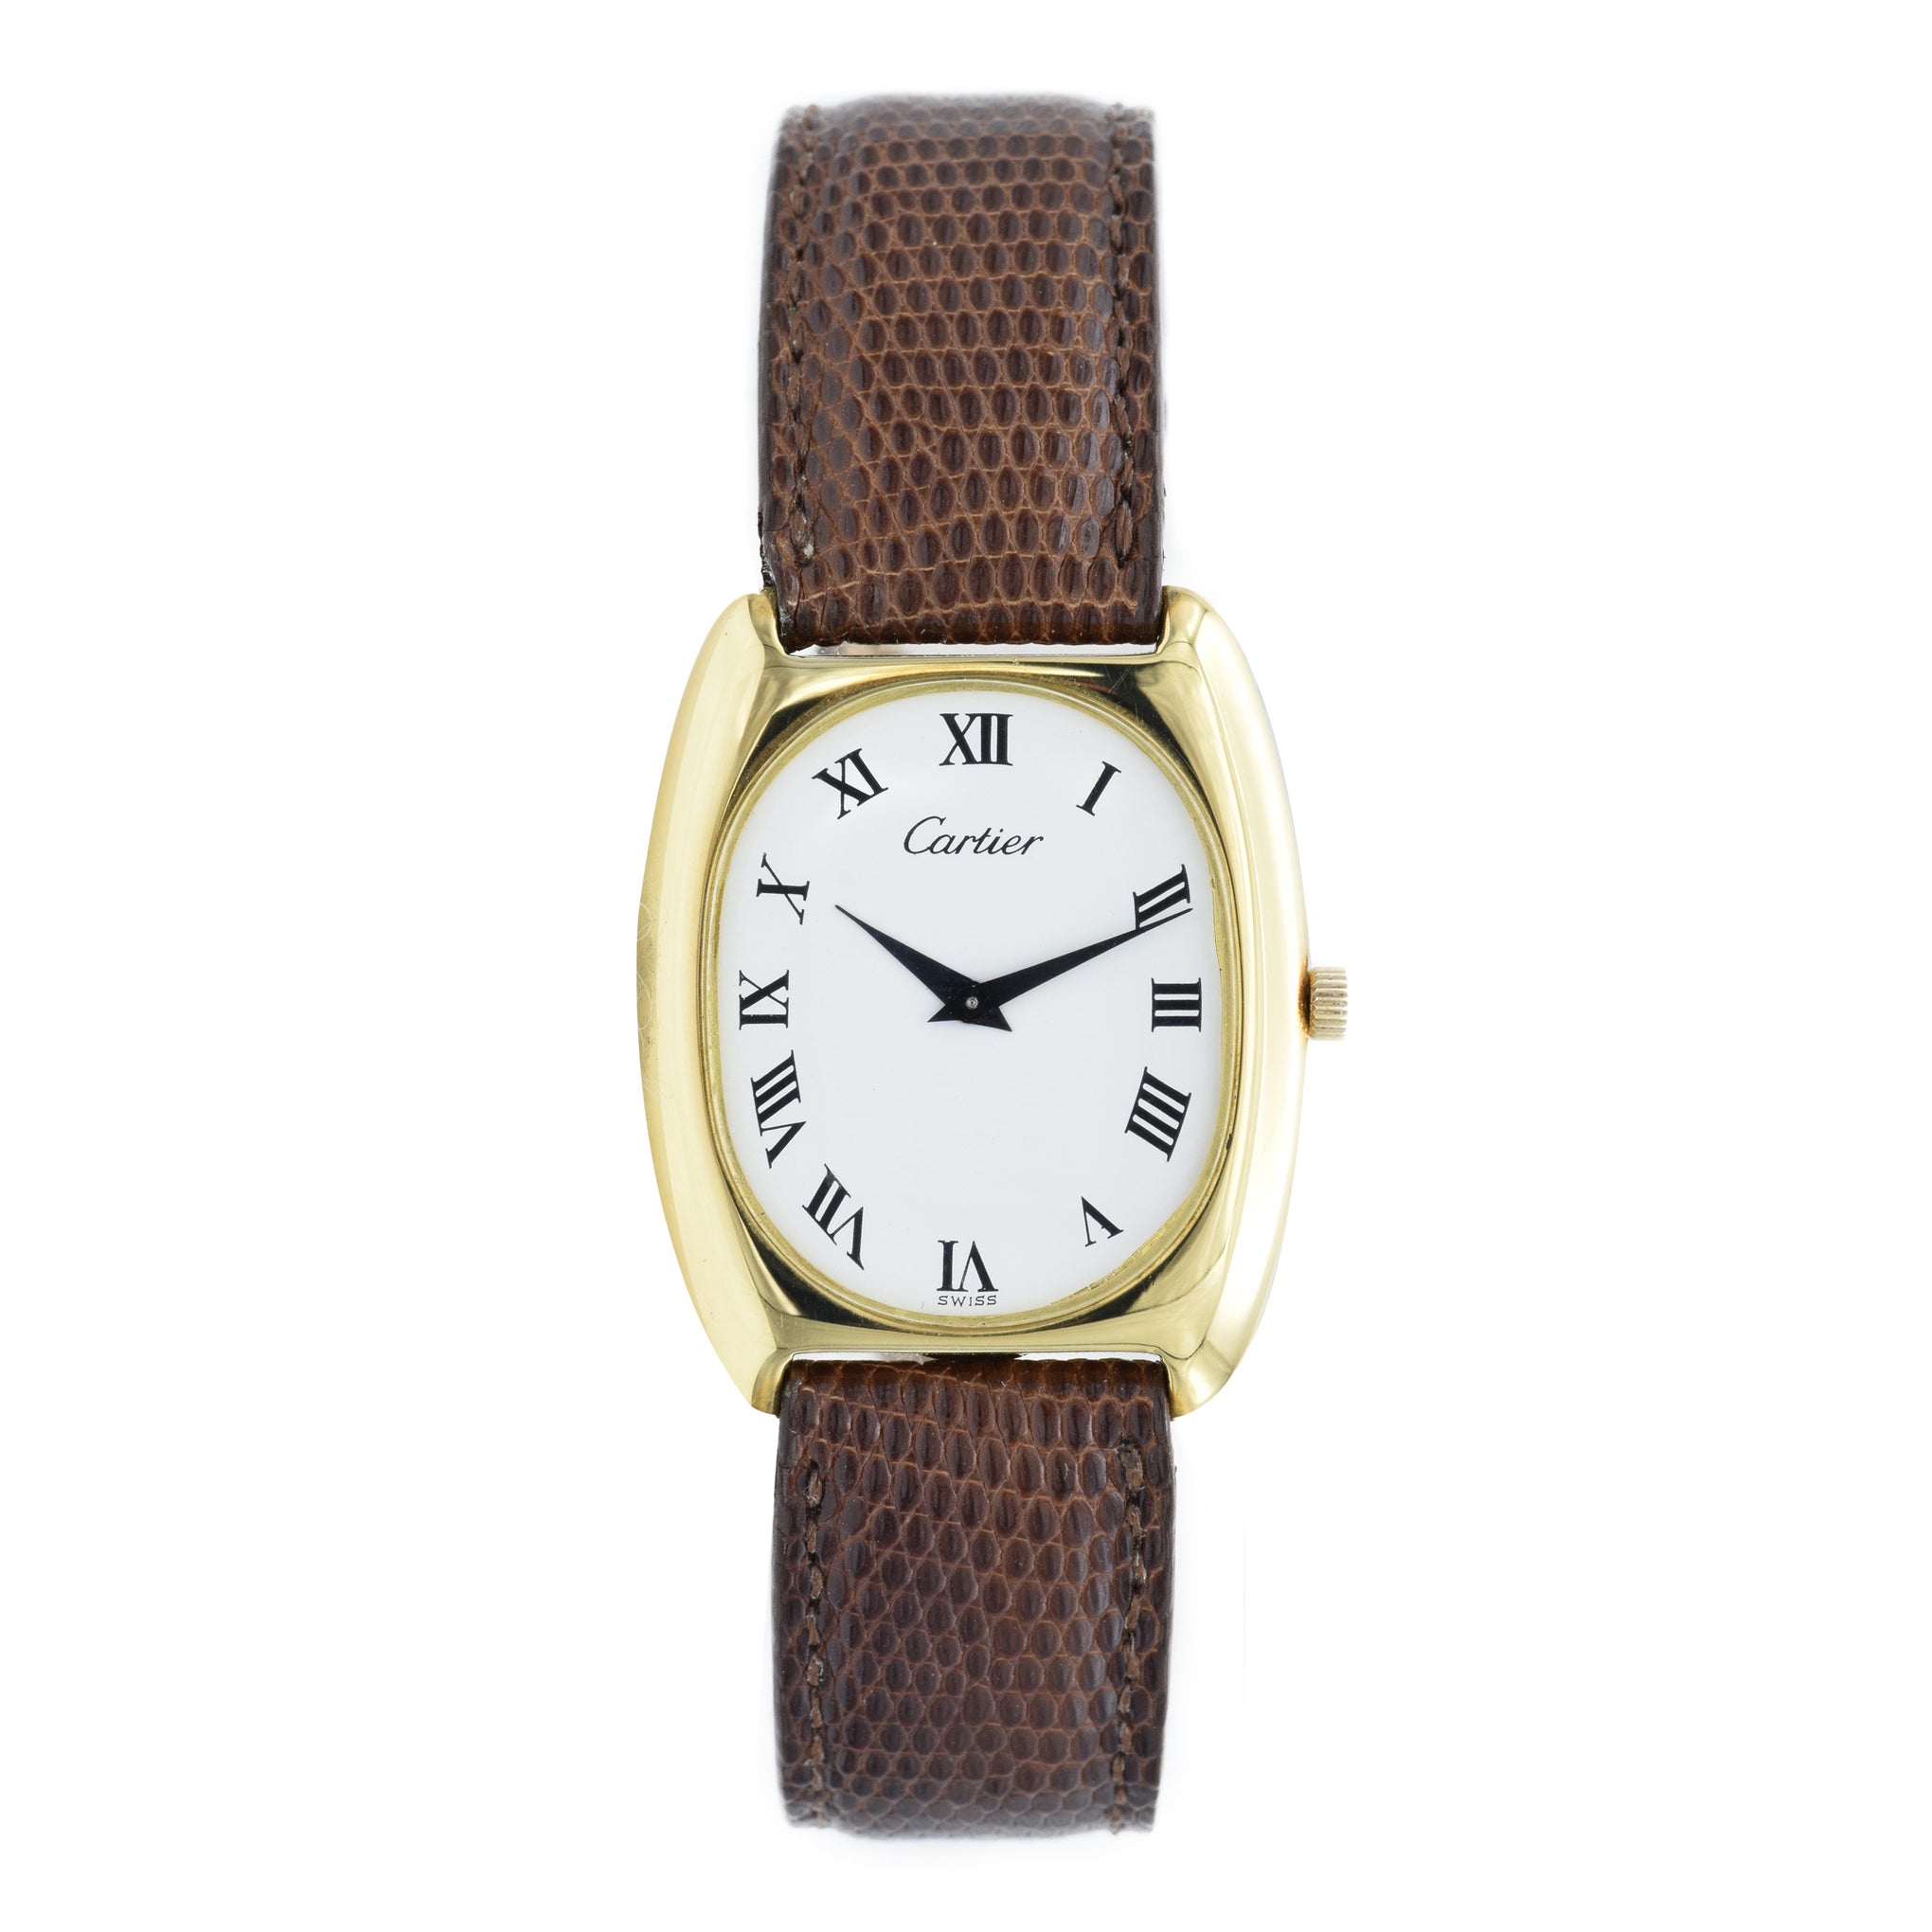 Vintage 1980s Cartier Watch